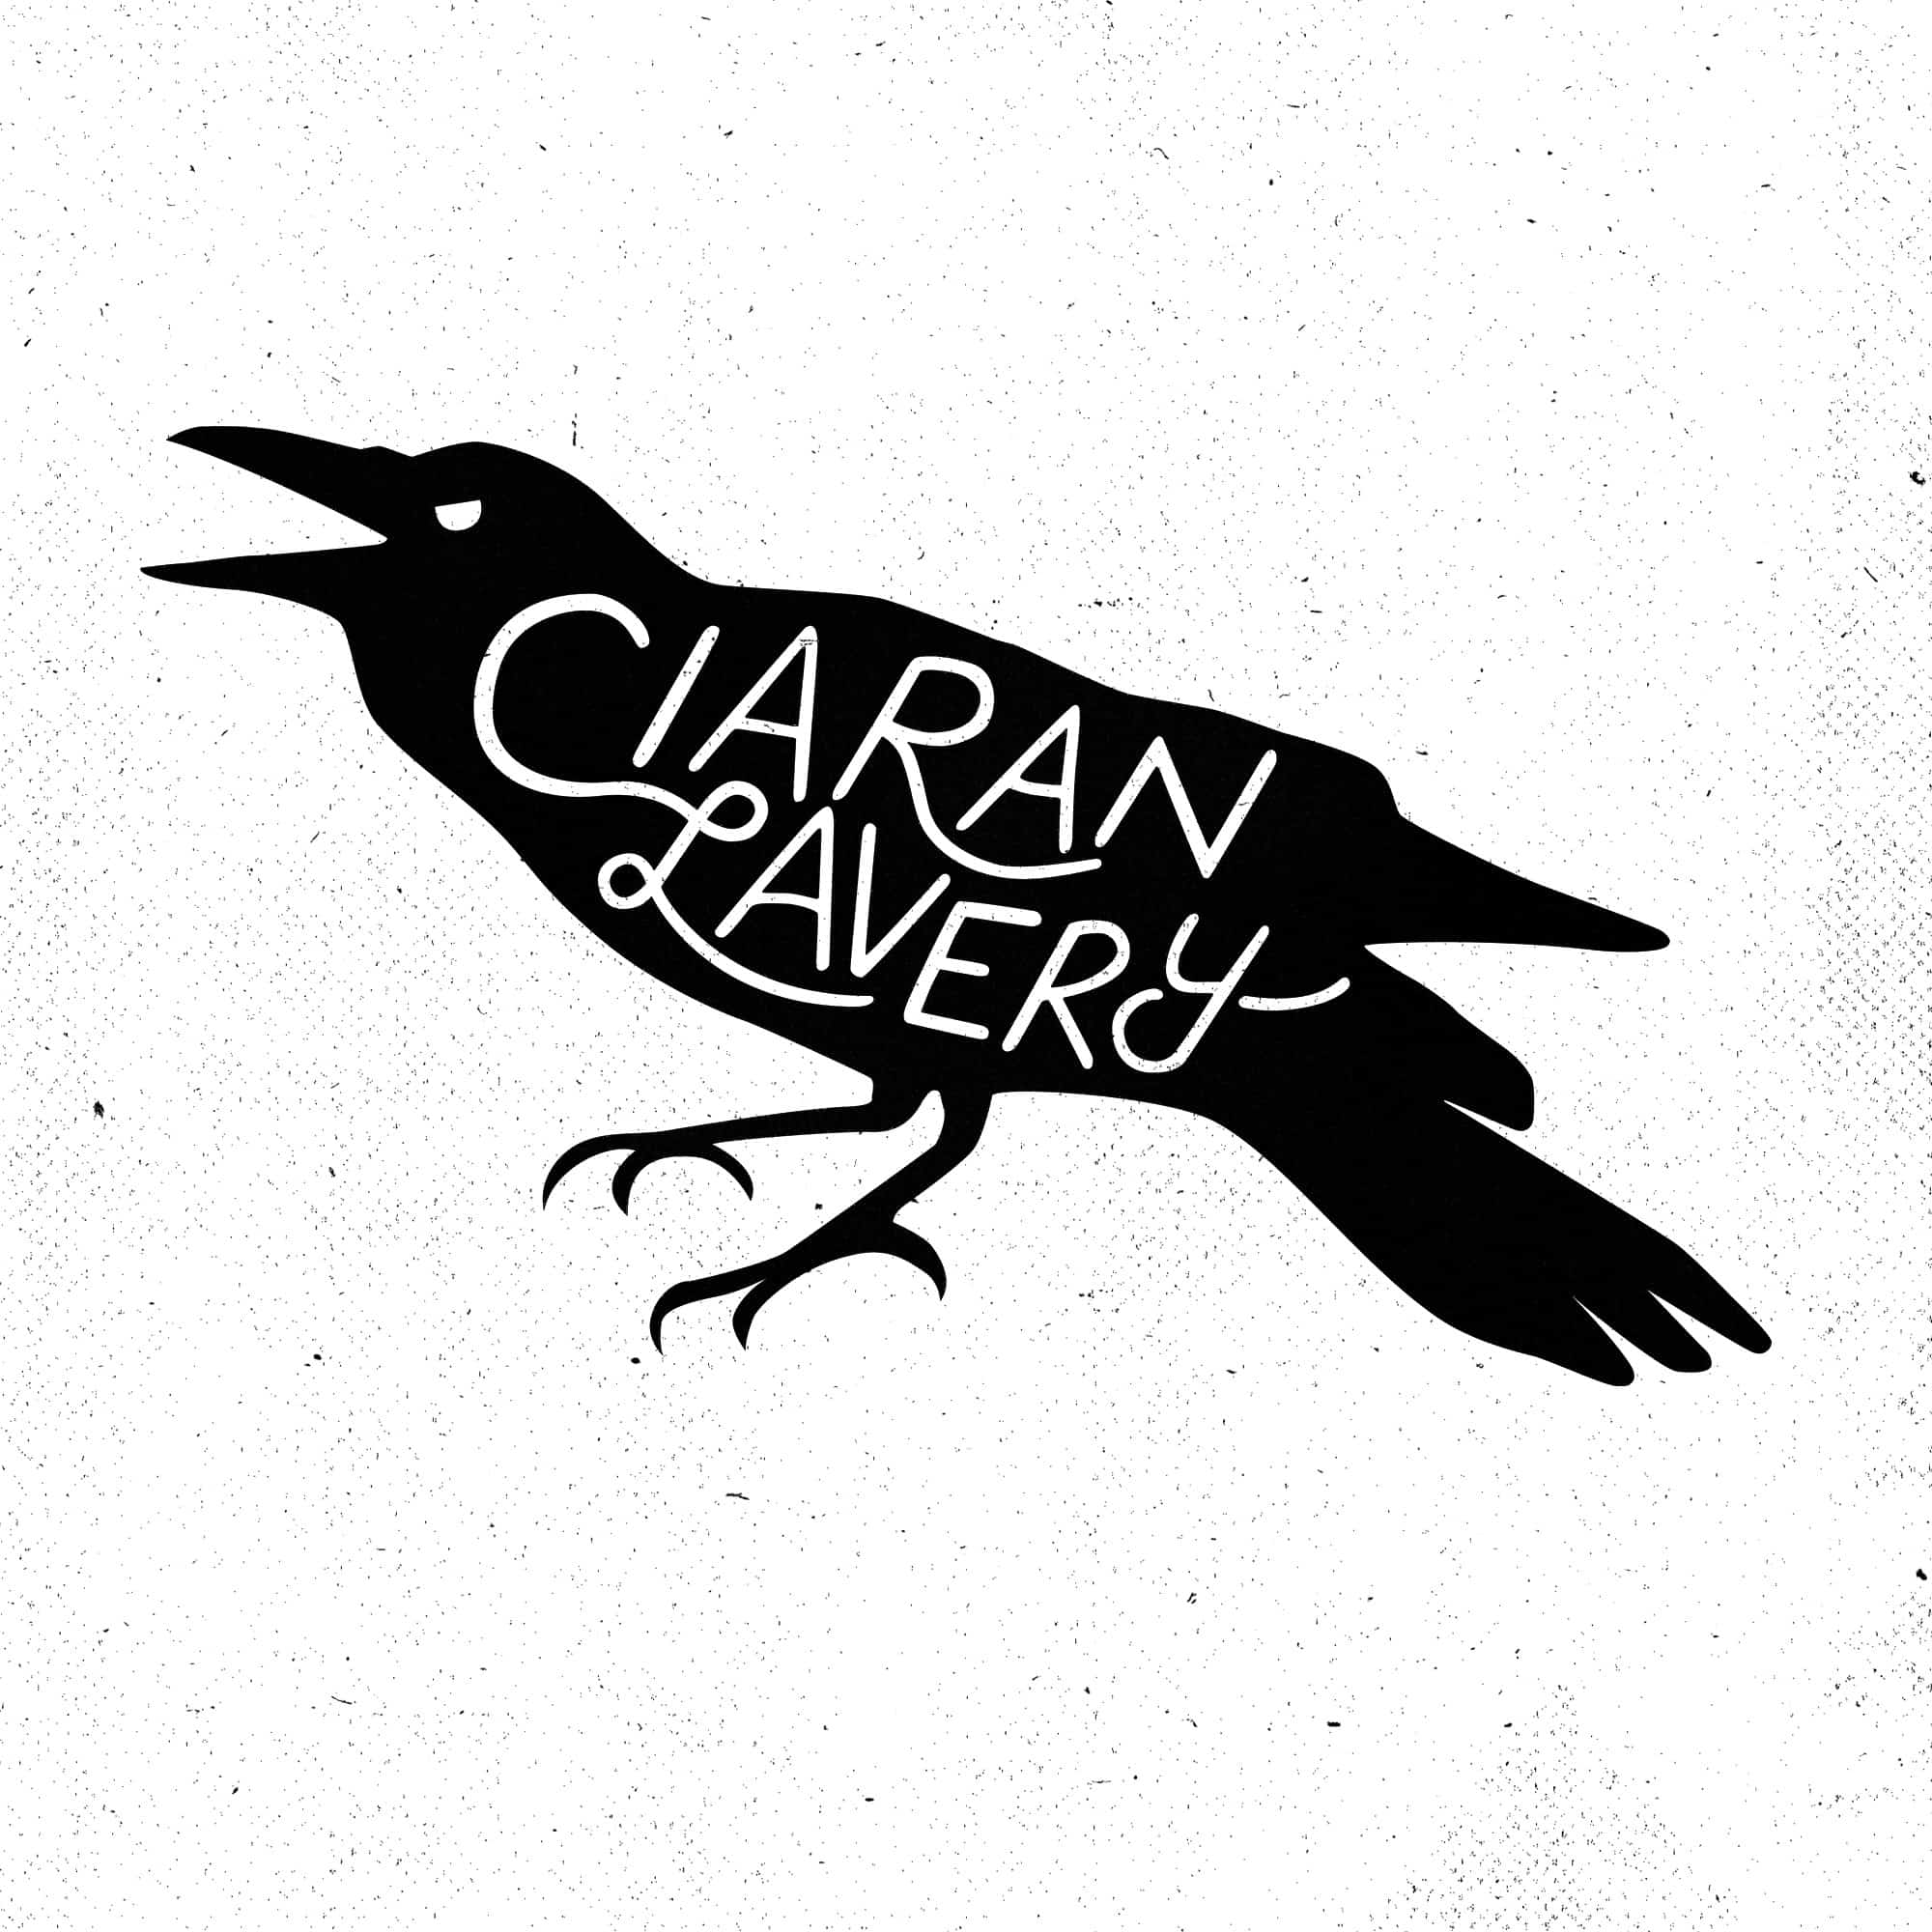 Ciaran Lavery: The Open Fund for Music Creators